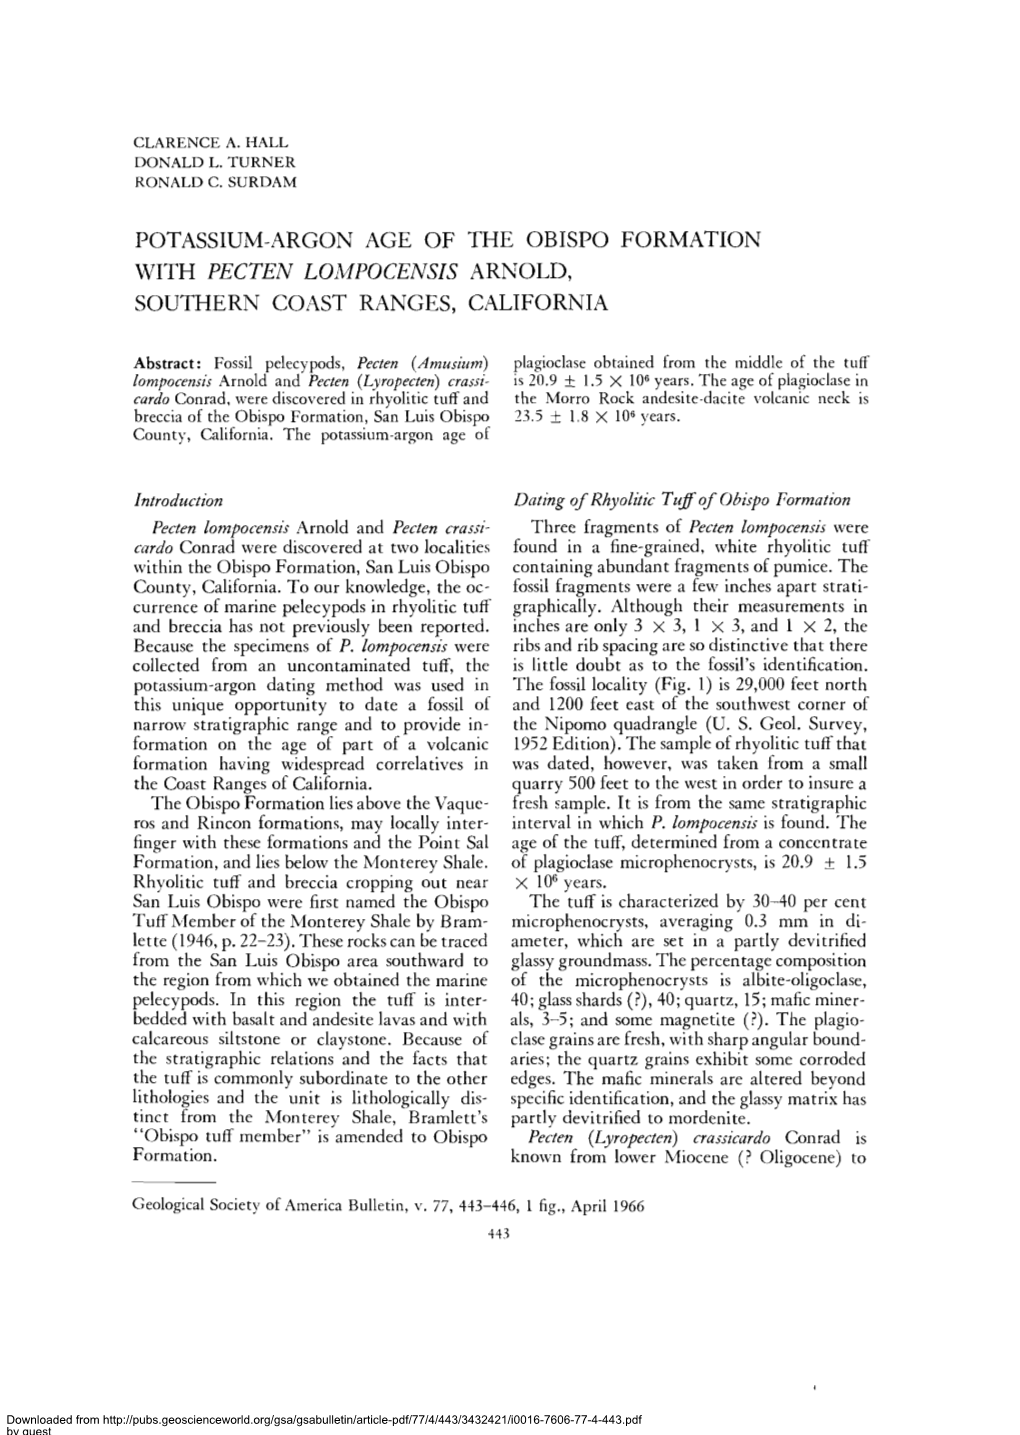 Potassium-Argon Age of the Obispo Formation with Pecten Lompocensis Arnold, Southern Coast Ranges, California